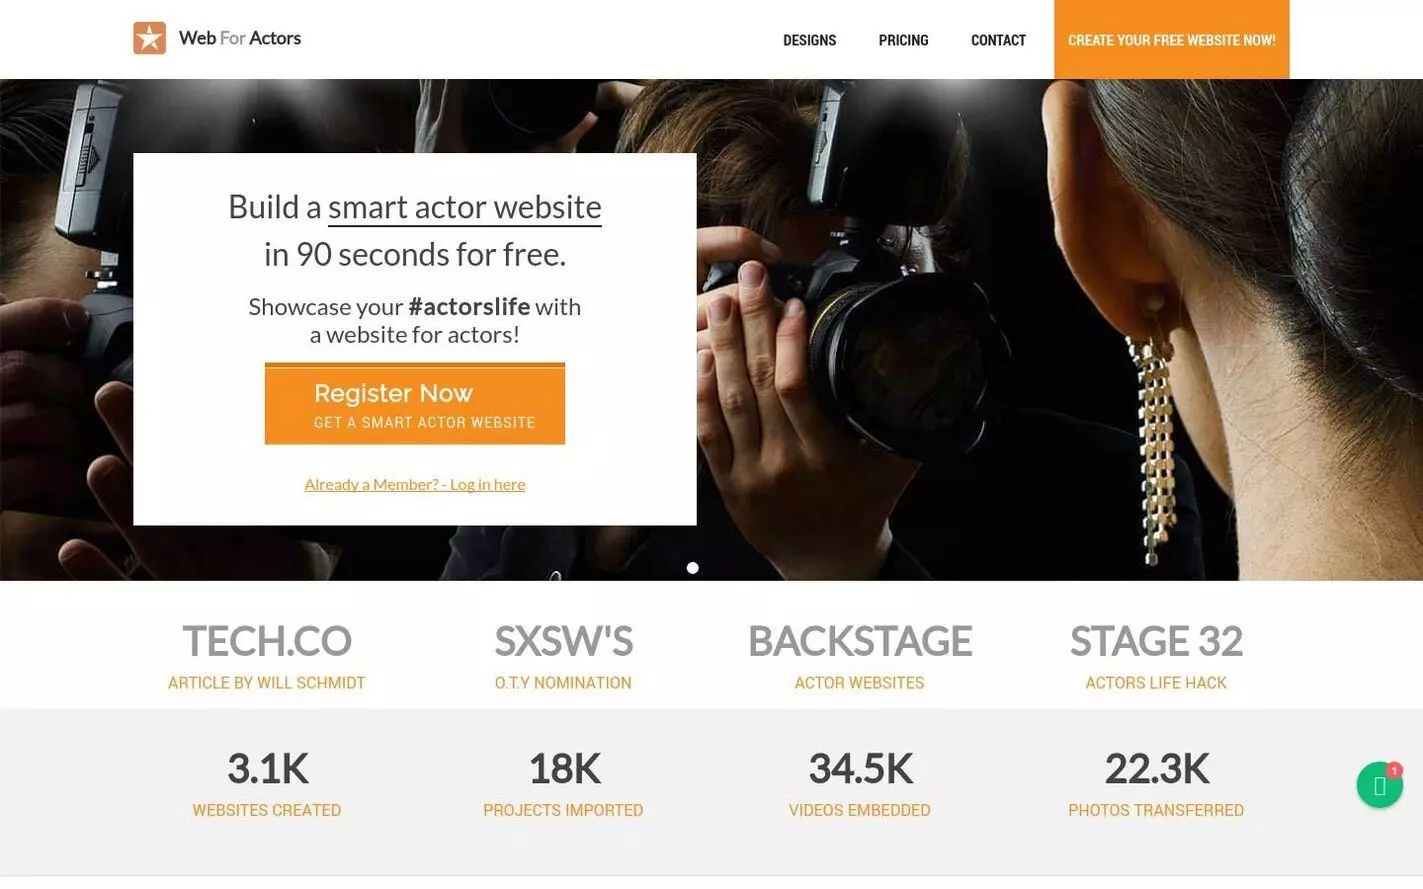 Web For Actors